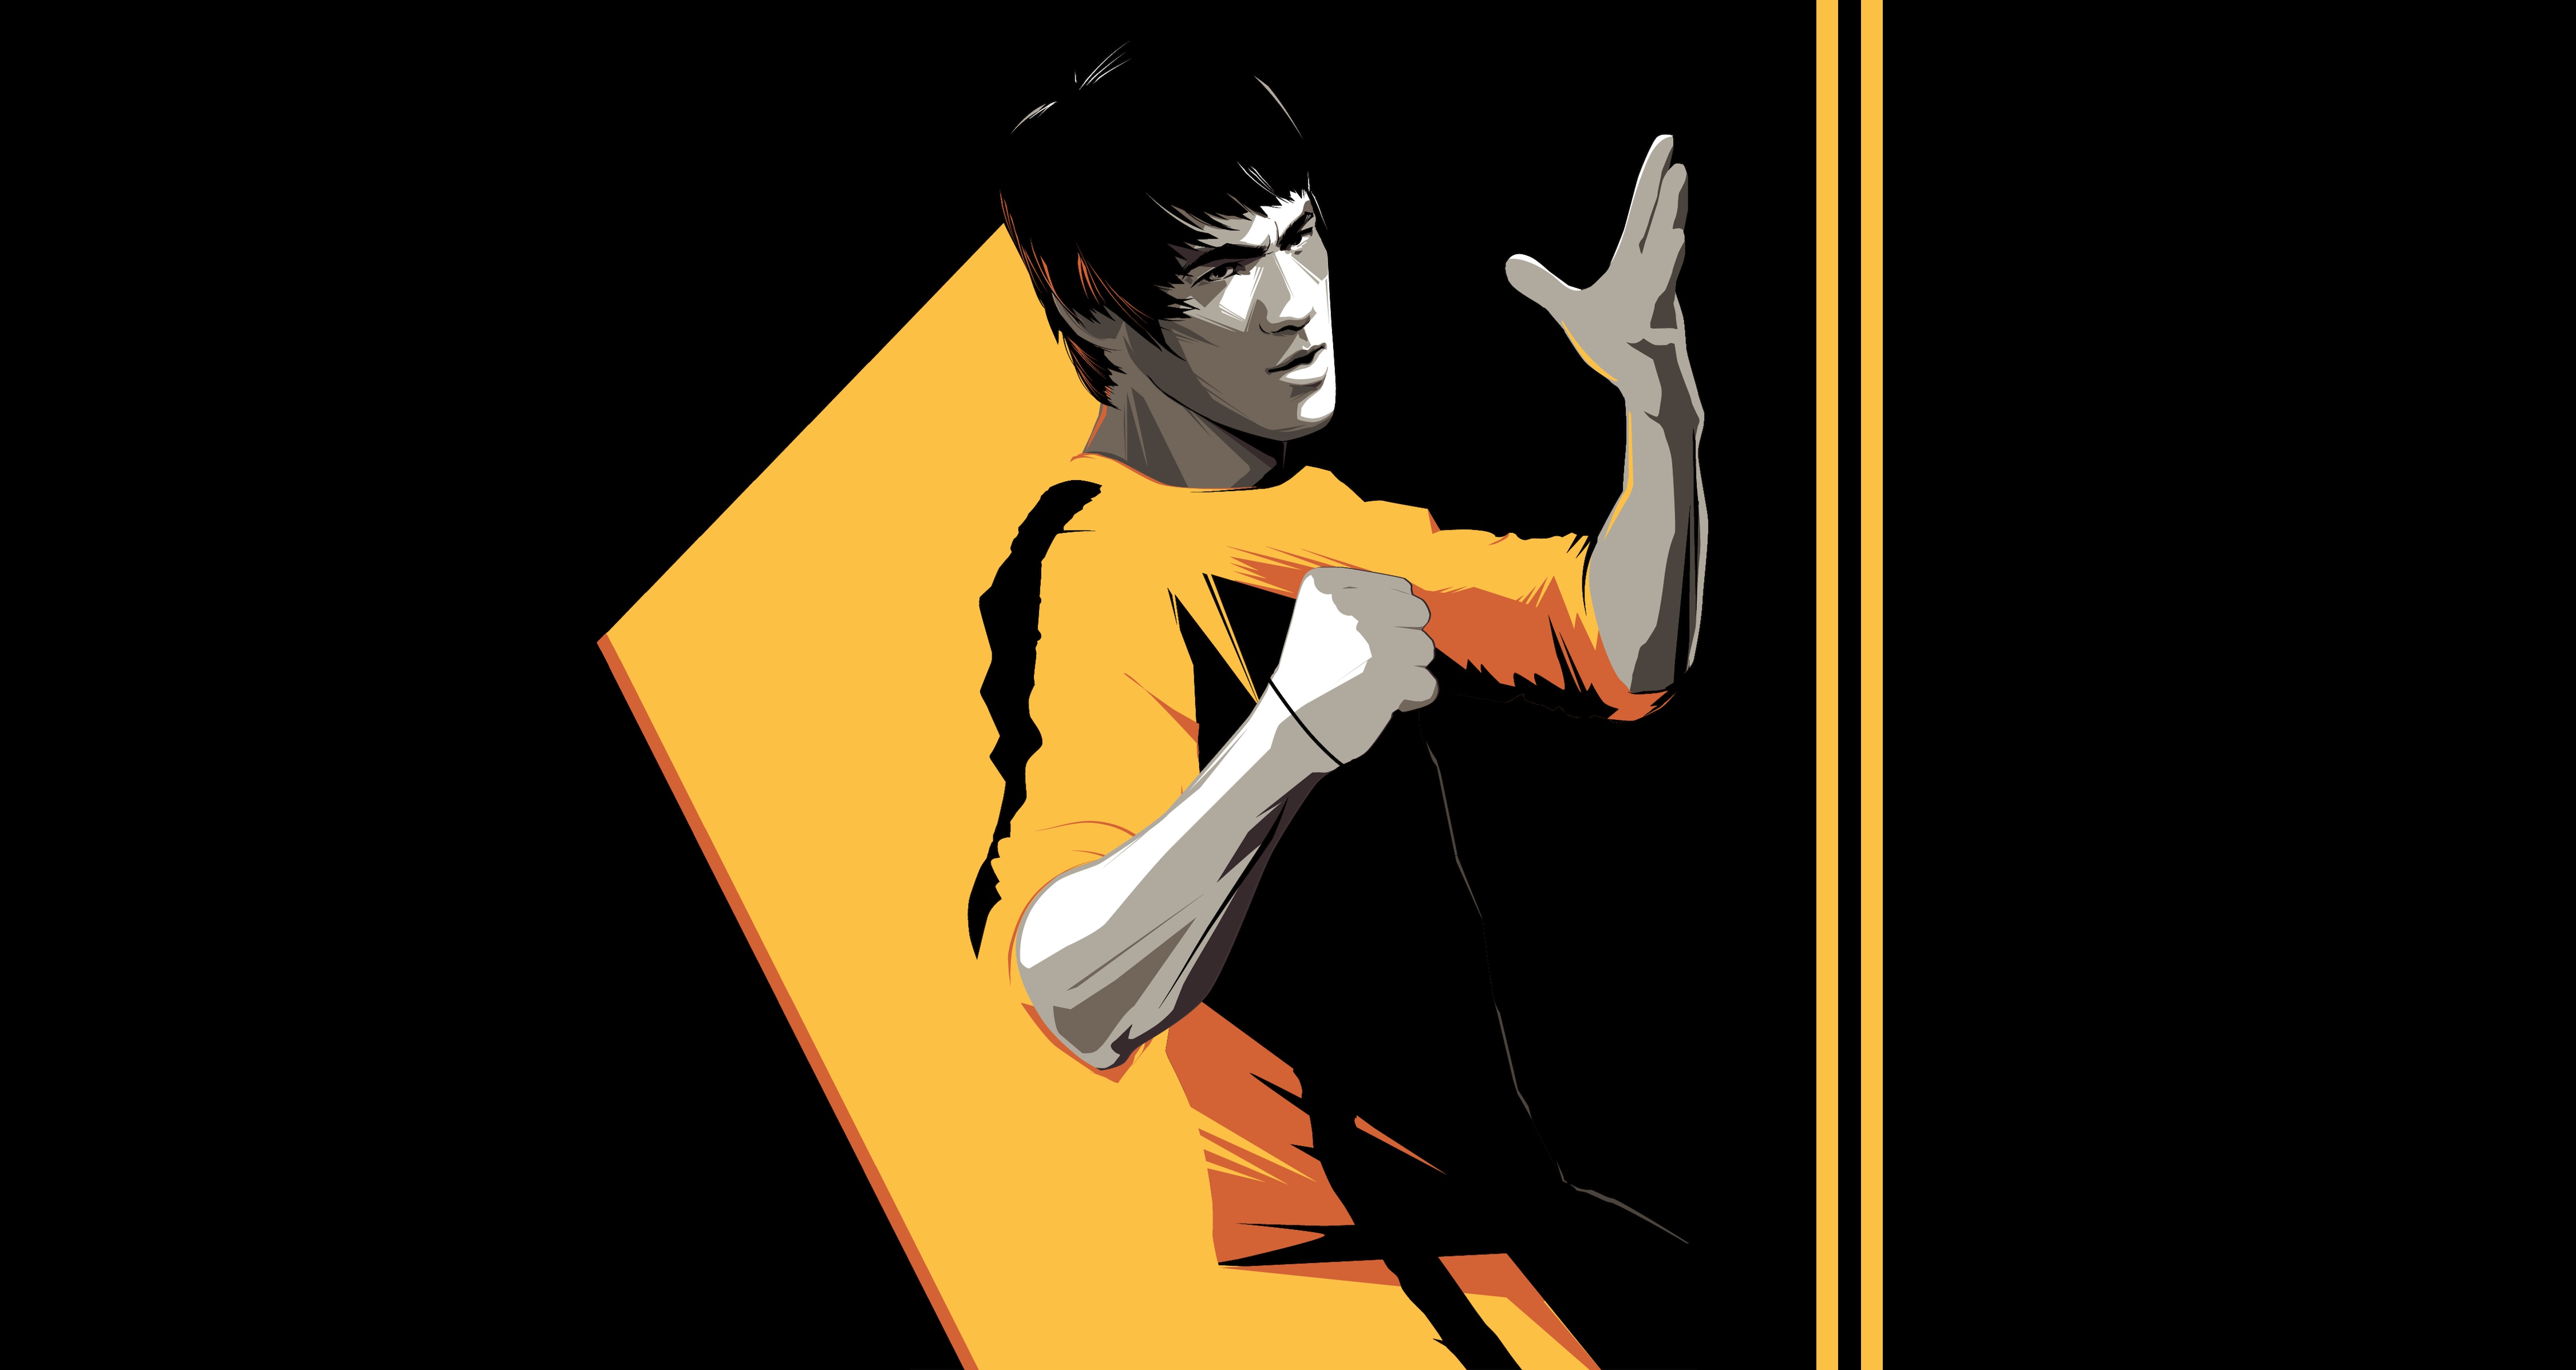 4K Bruce Lee Fondos de pantalla | Fondos de Escritorio